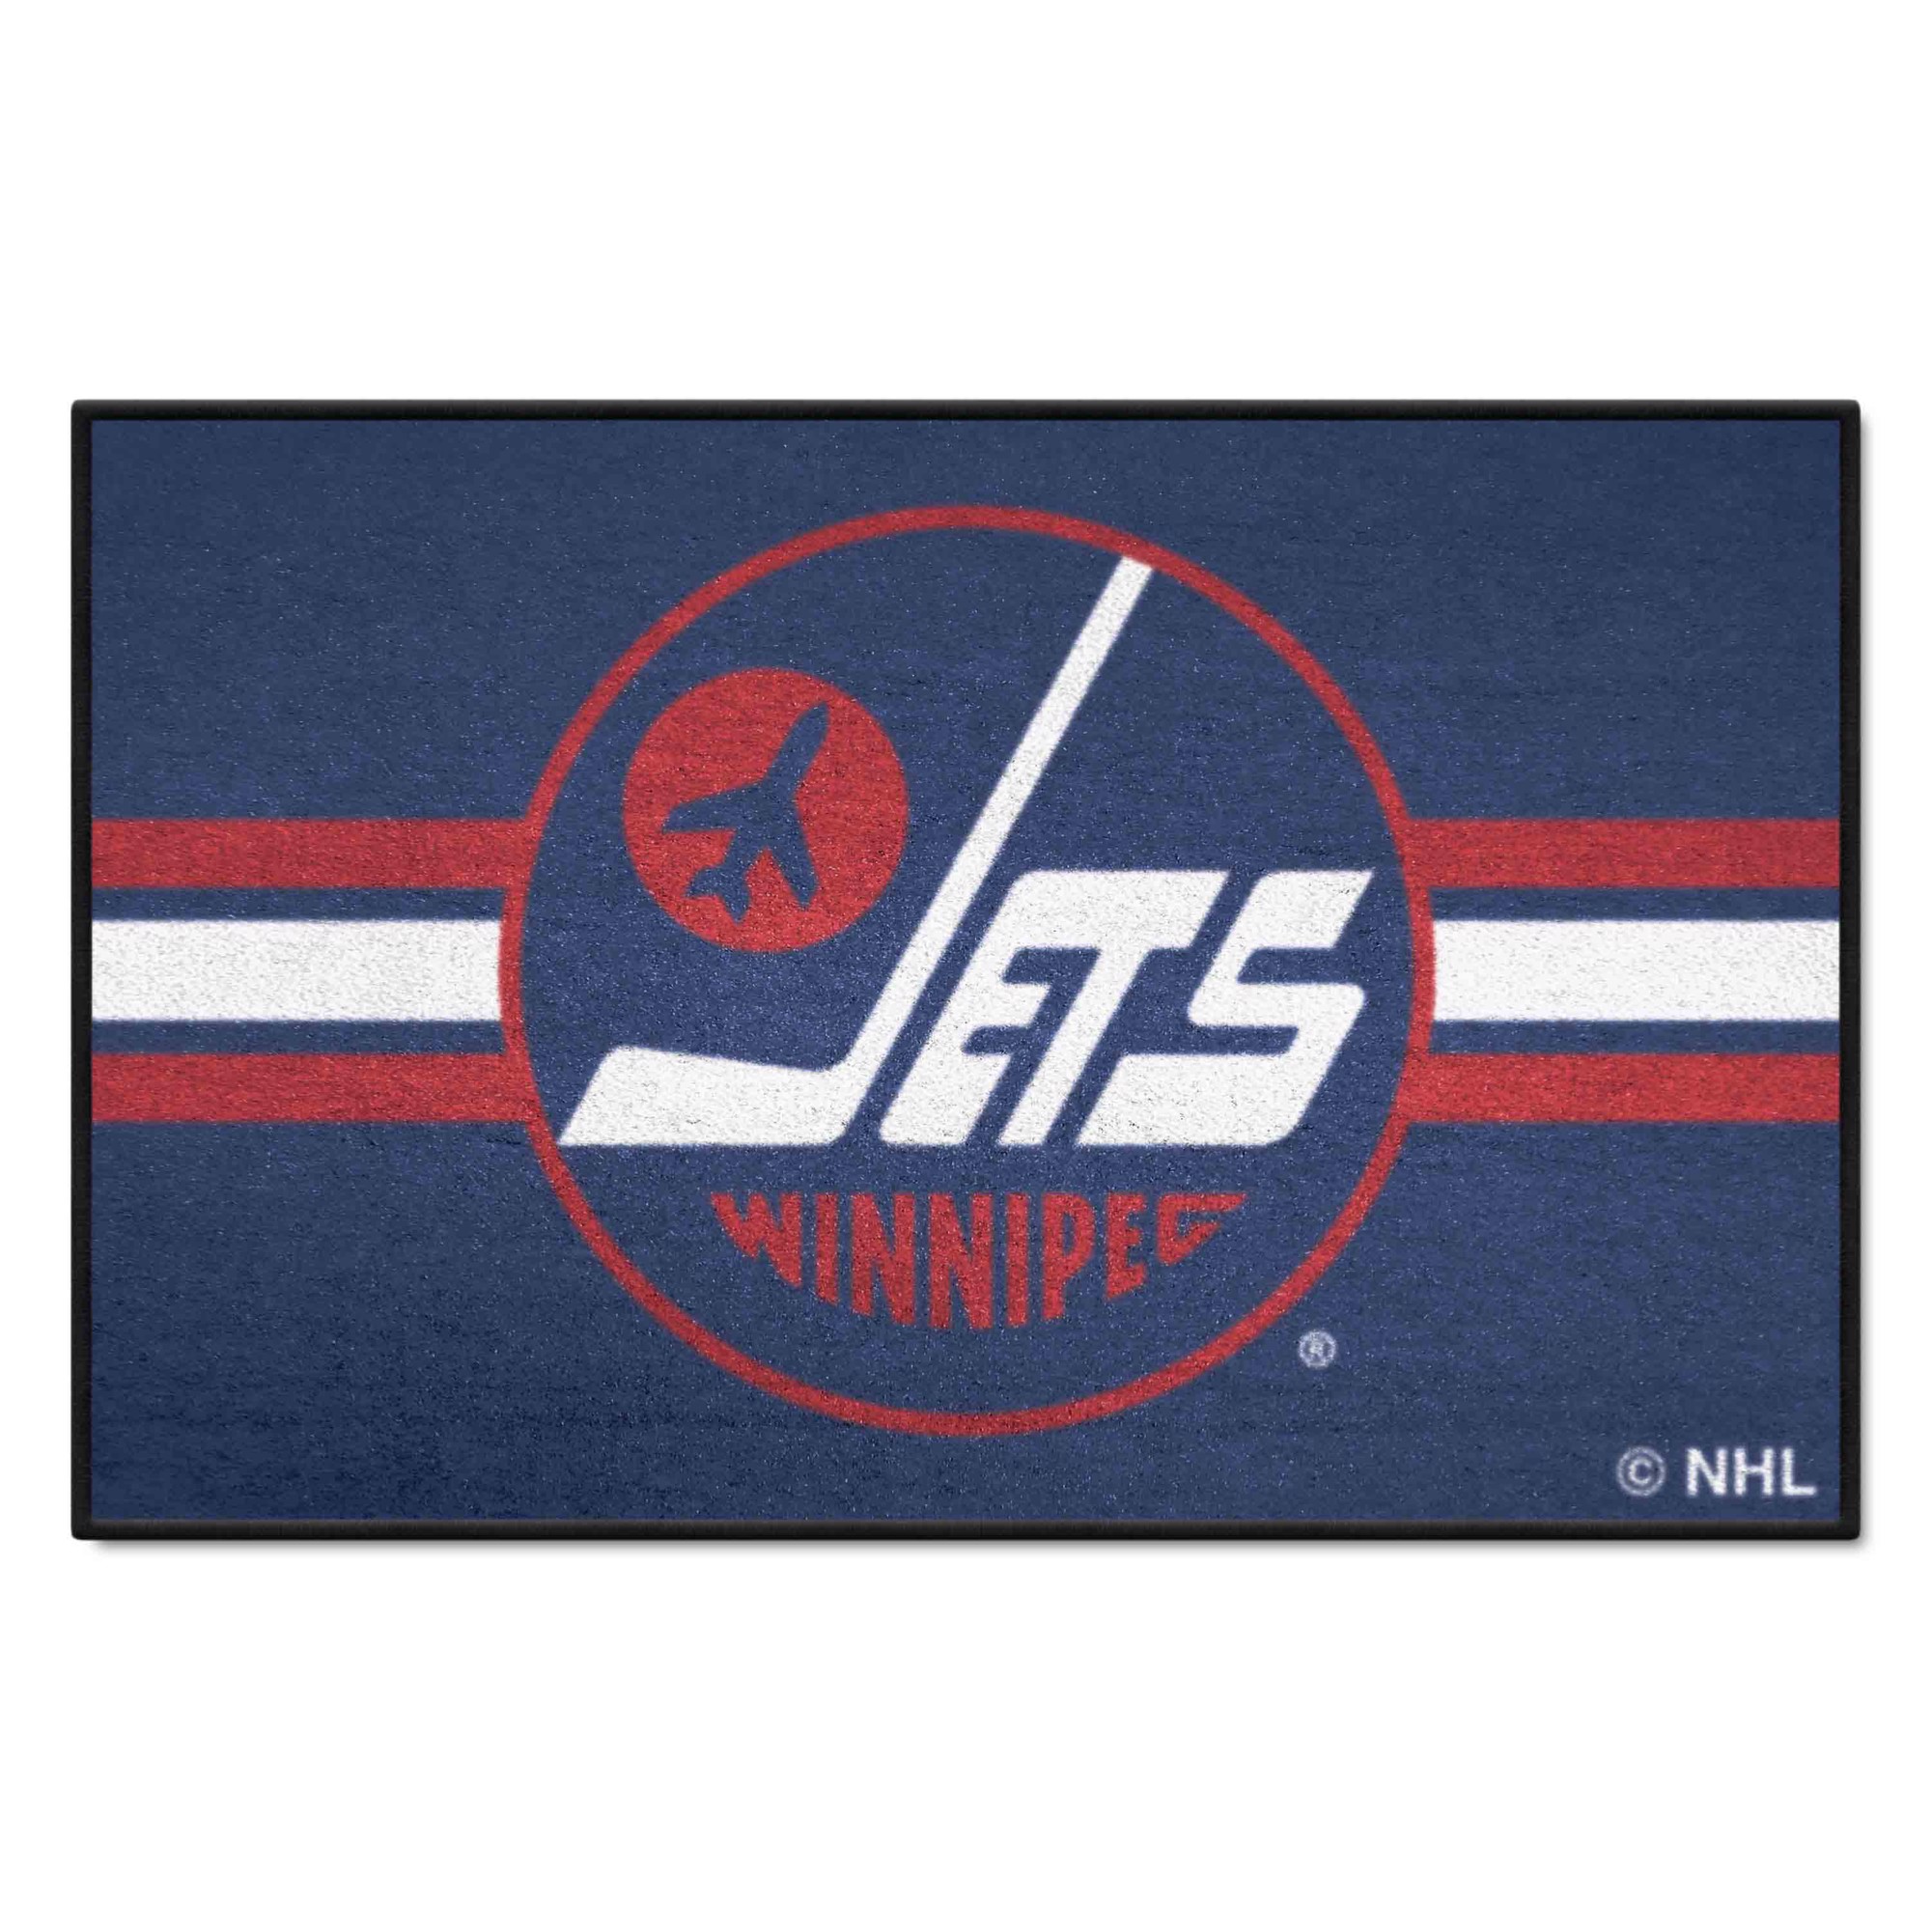 Winnipeg Jets alternate jersey